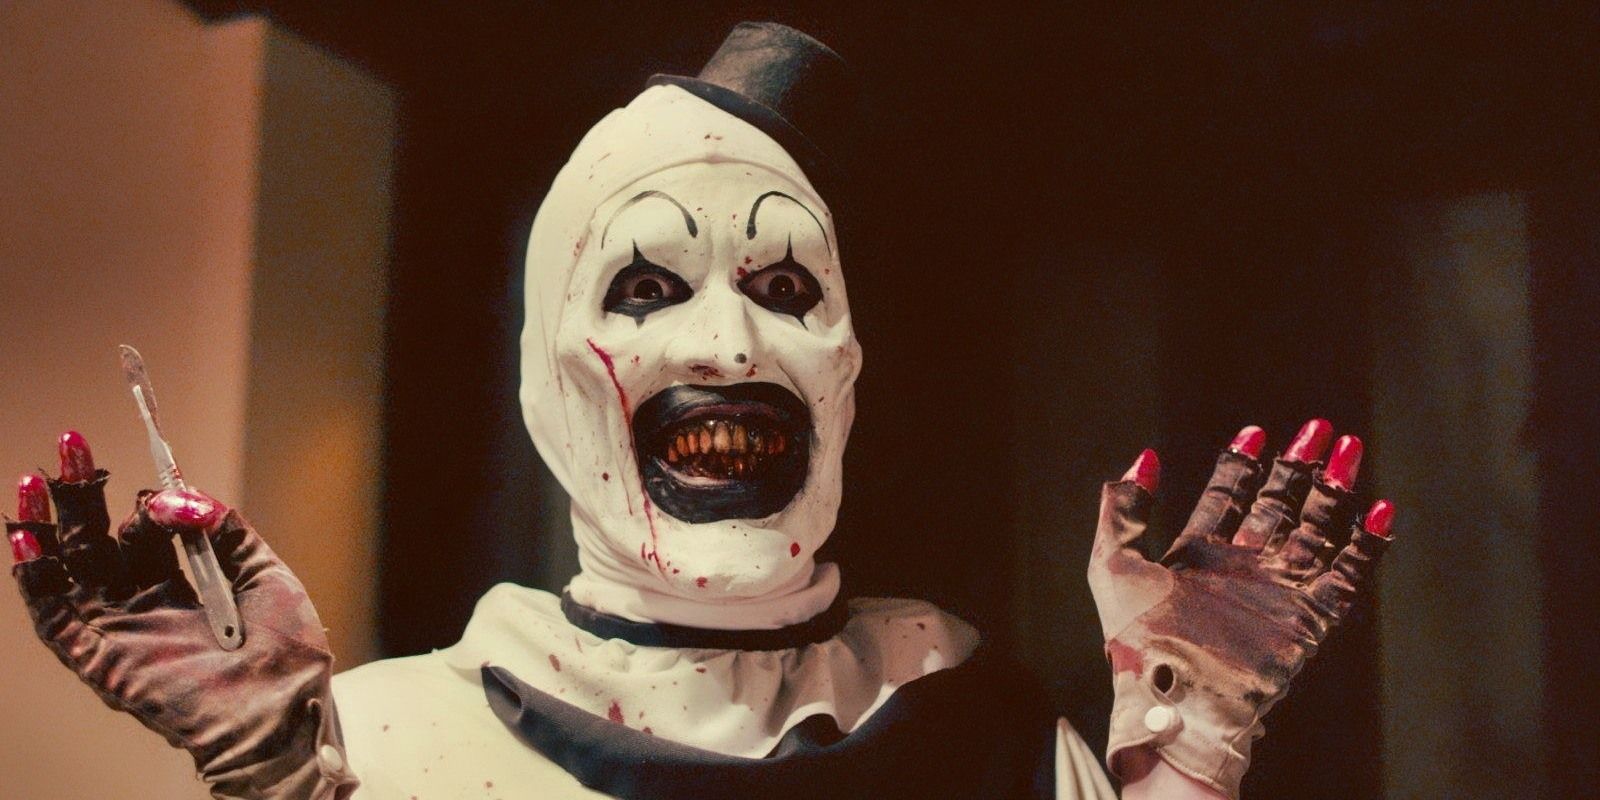 David Howard Thornton as Art the Clown in Terrifier.